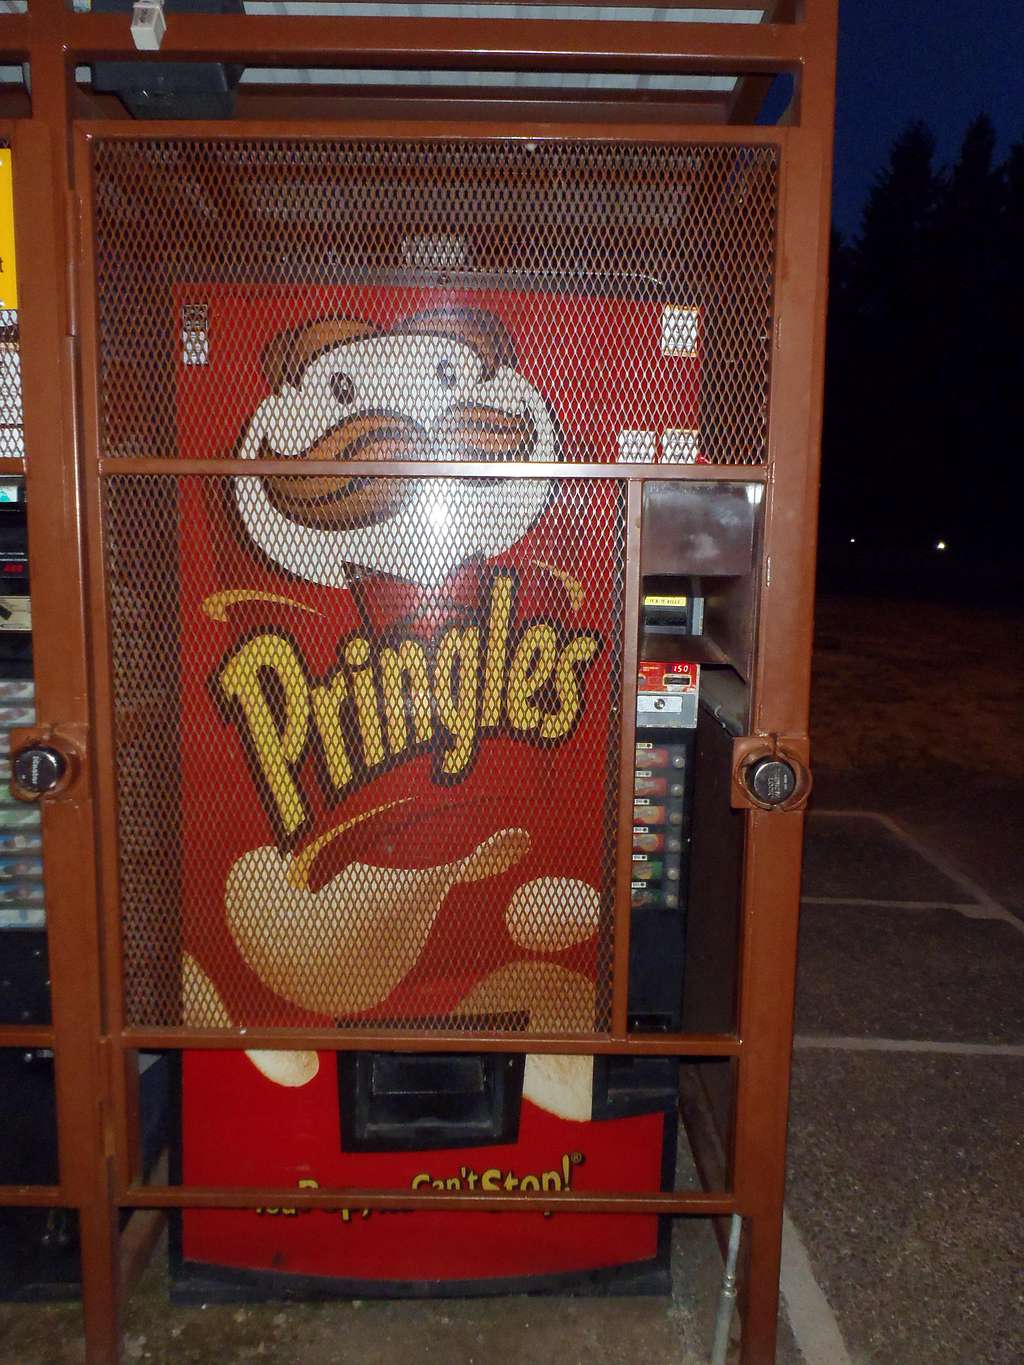 A Pringles Vending Machine?!